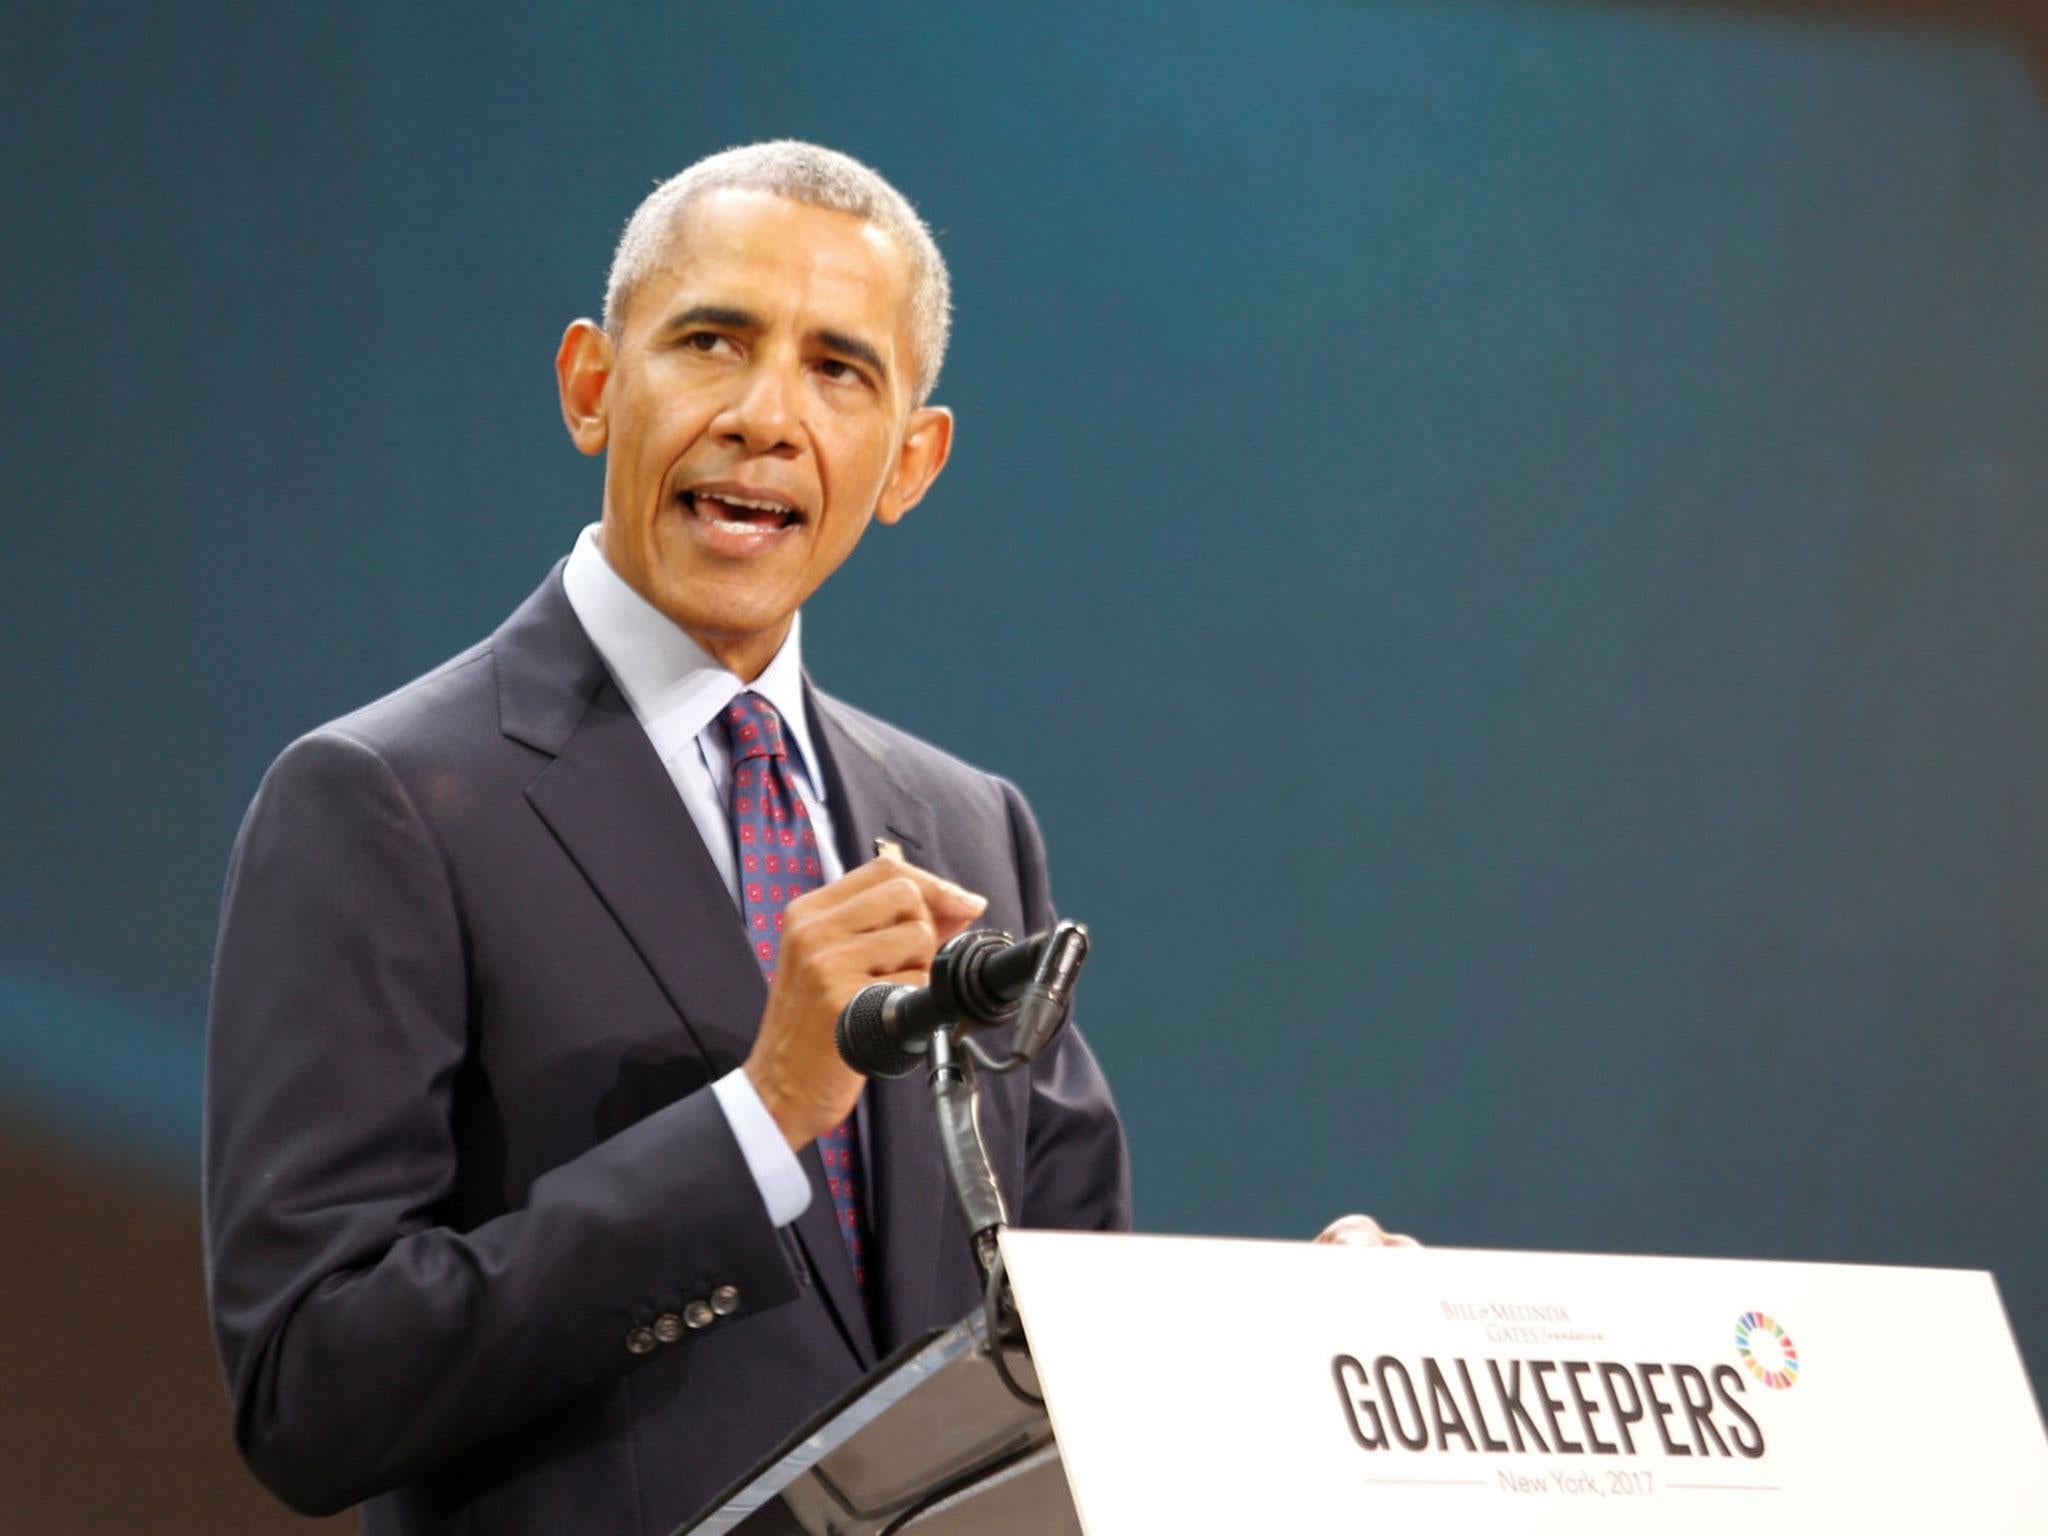 Former US President Barack Obama speaks at the Bill and Melinda Gates Foundation Goalkeepers event in Manhattan, New York